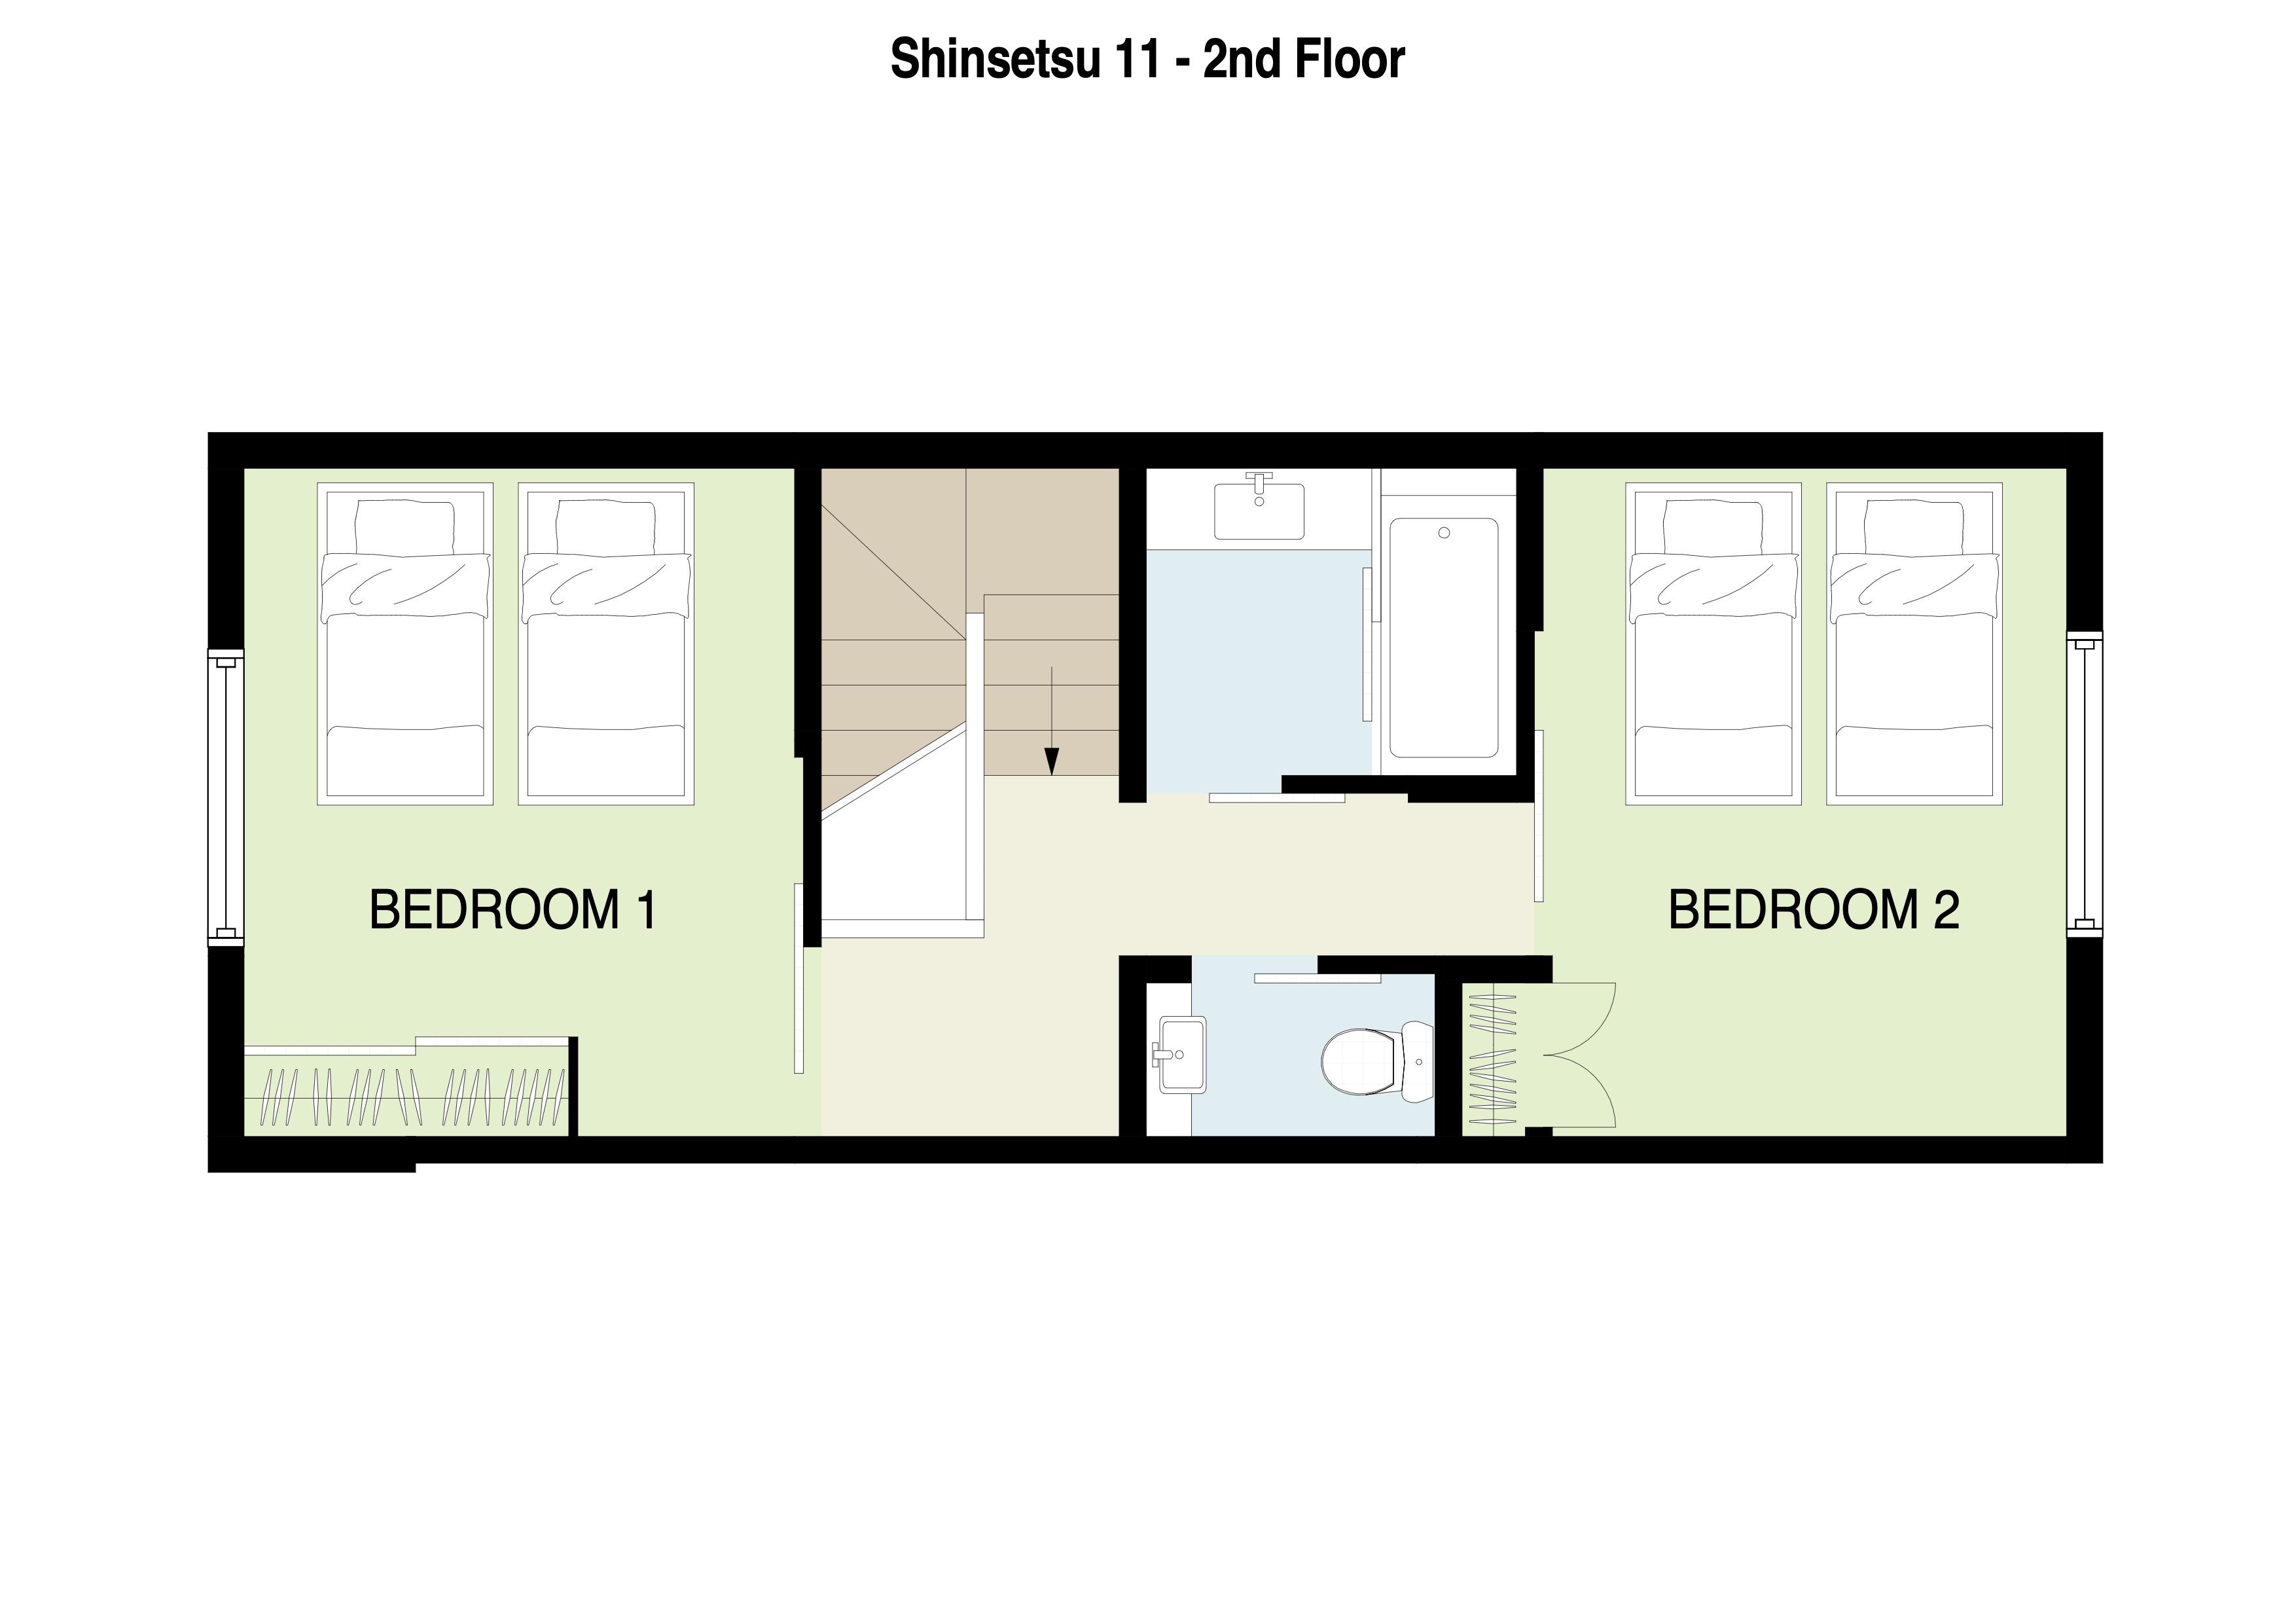 Shinsetsu Apartments 11 -2nd Floor plan